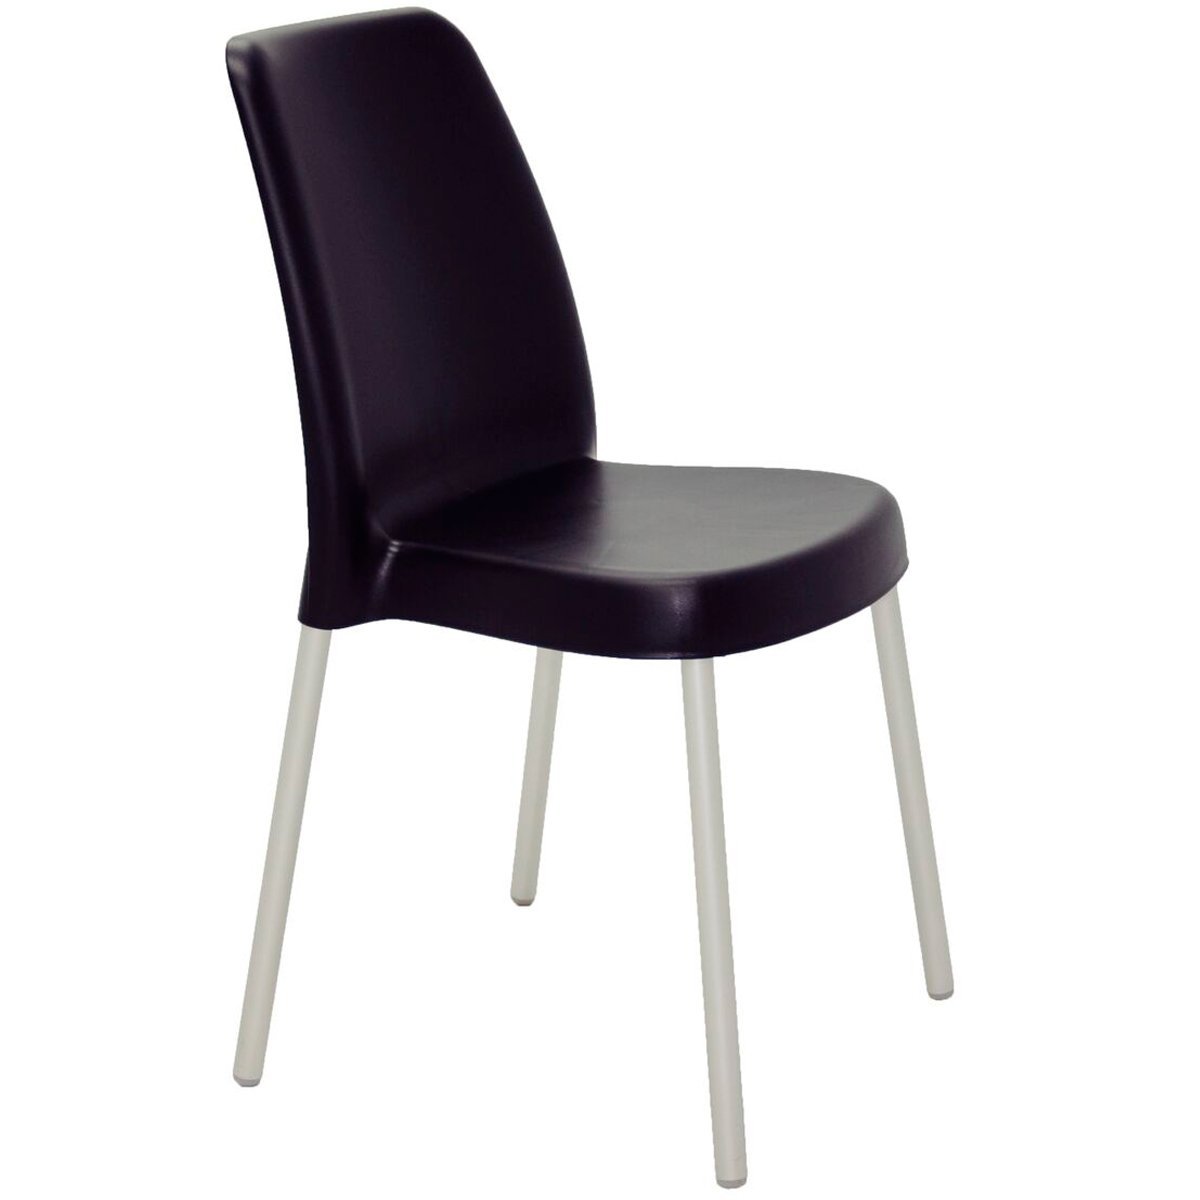 Conjunto 4 Cadeiras Plástica Vanda com Pernas de Alumínio Anodizadas- Tramontina - Preto 92053/909 - 3